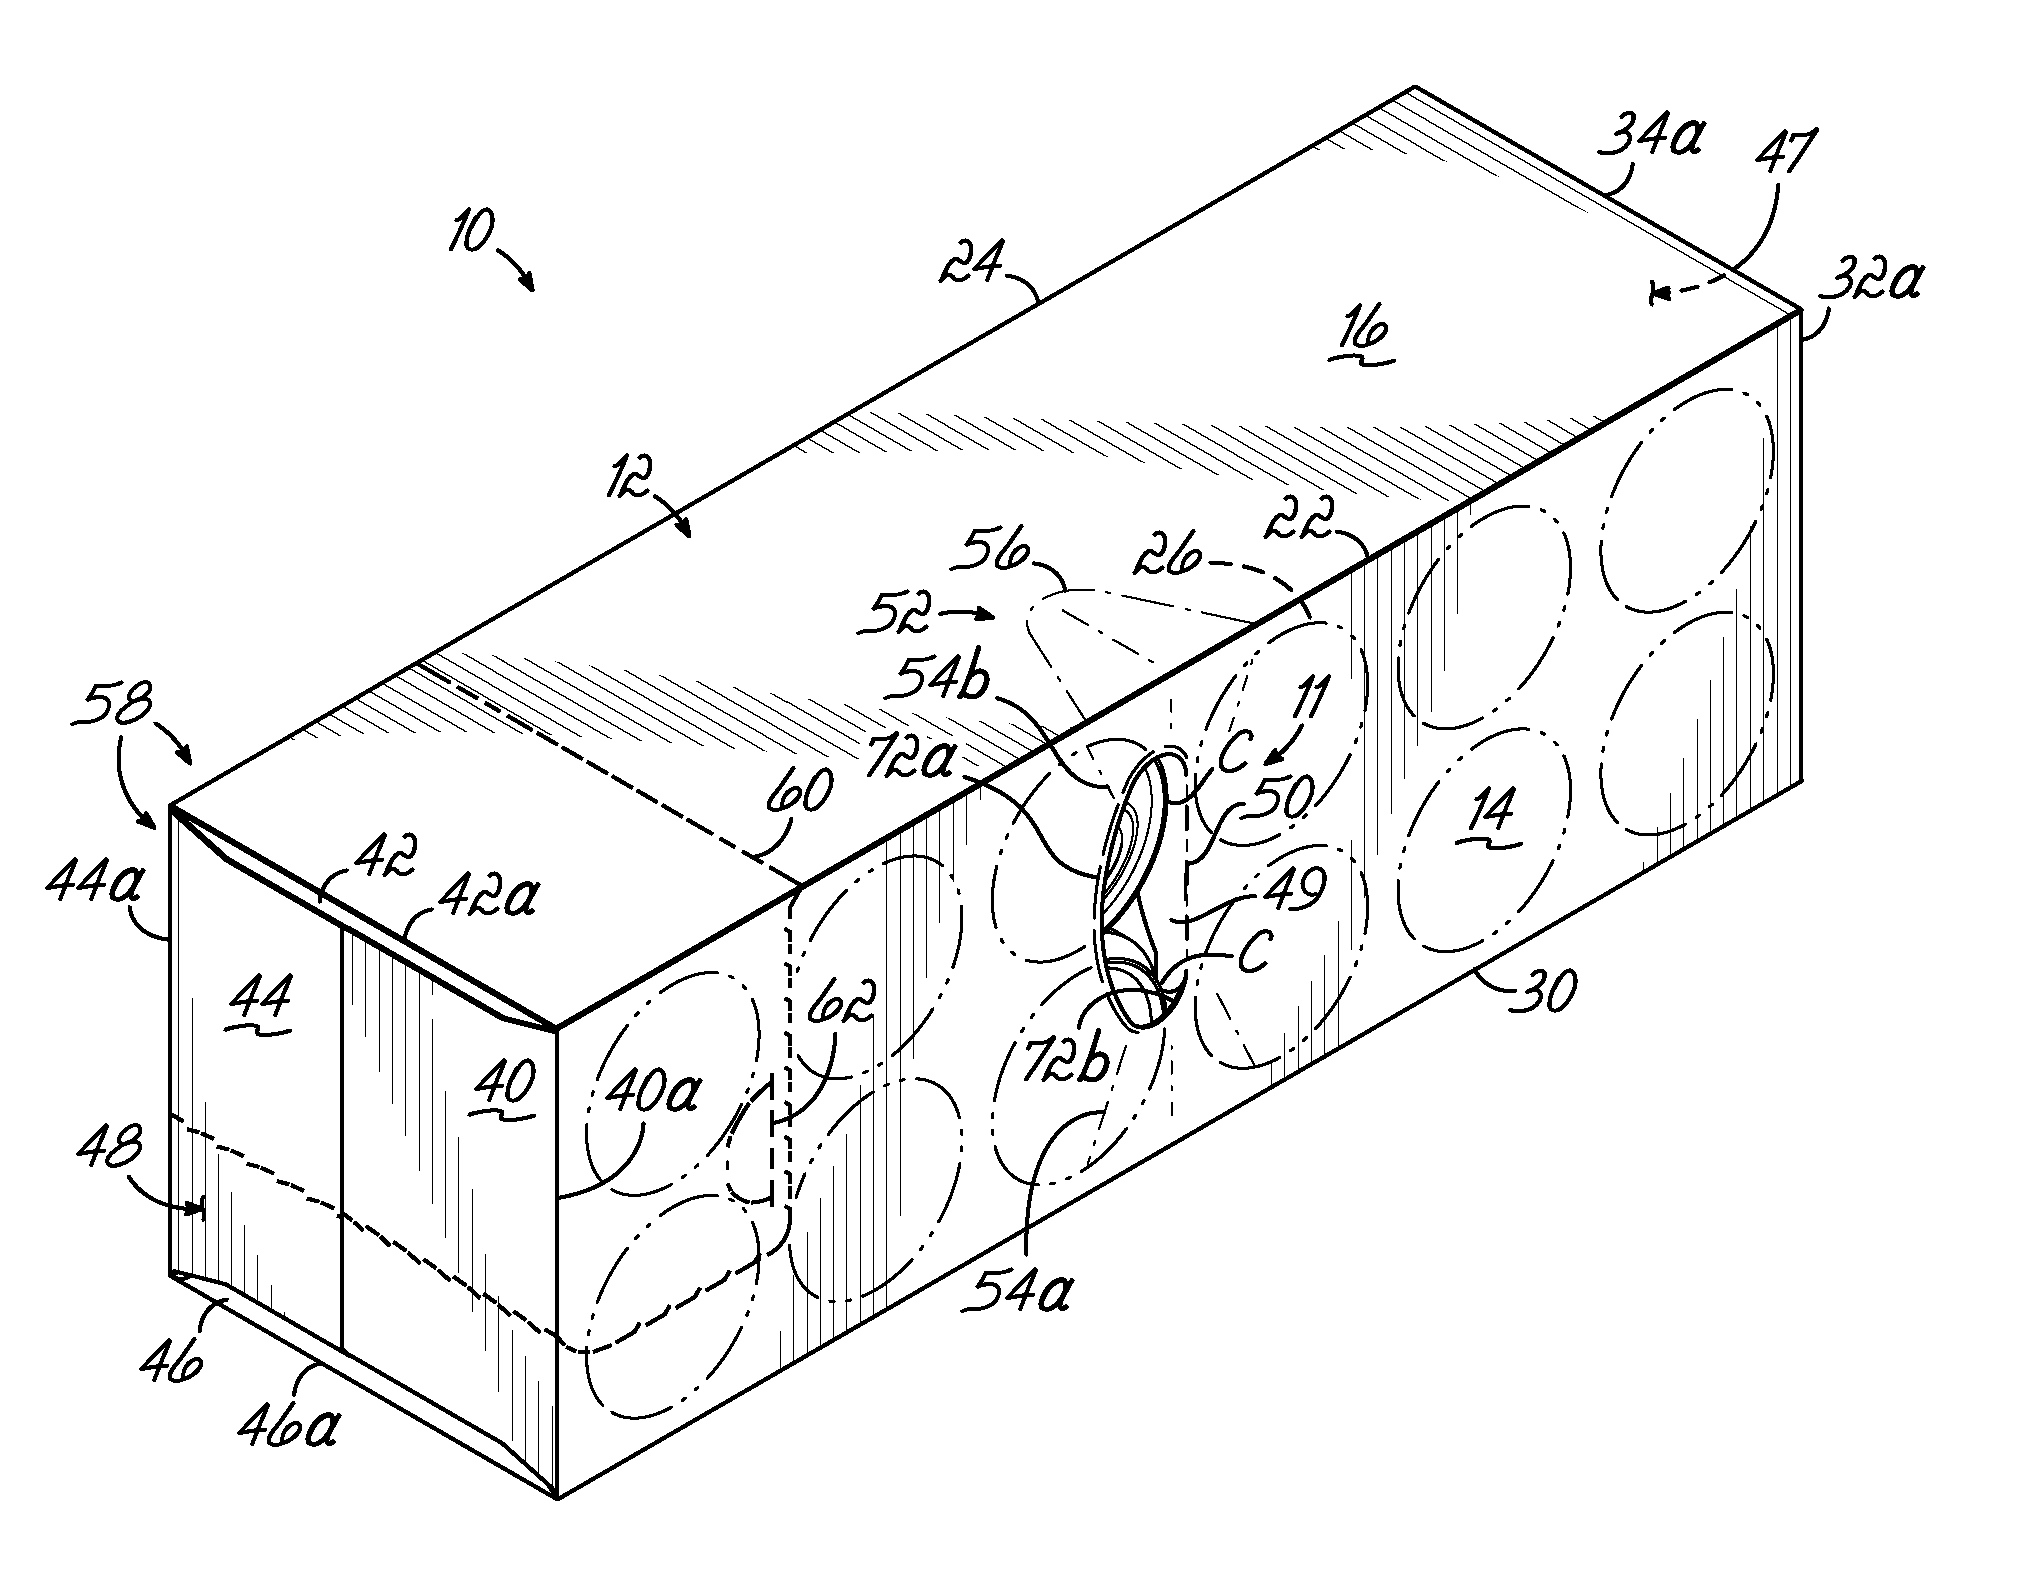 Carton and handle in multi-ply carton material